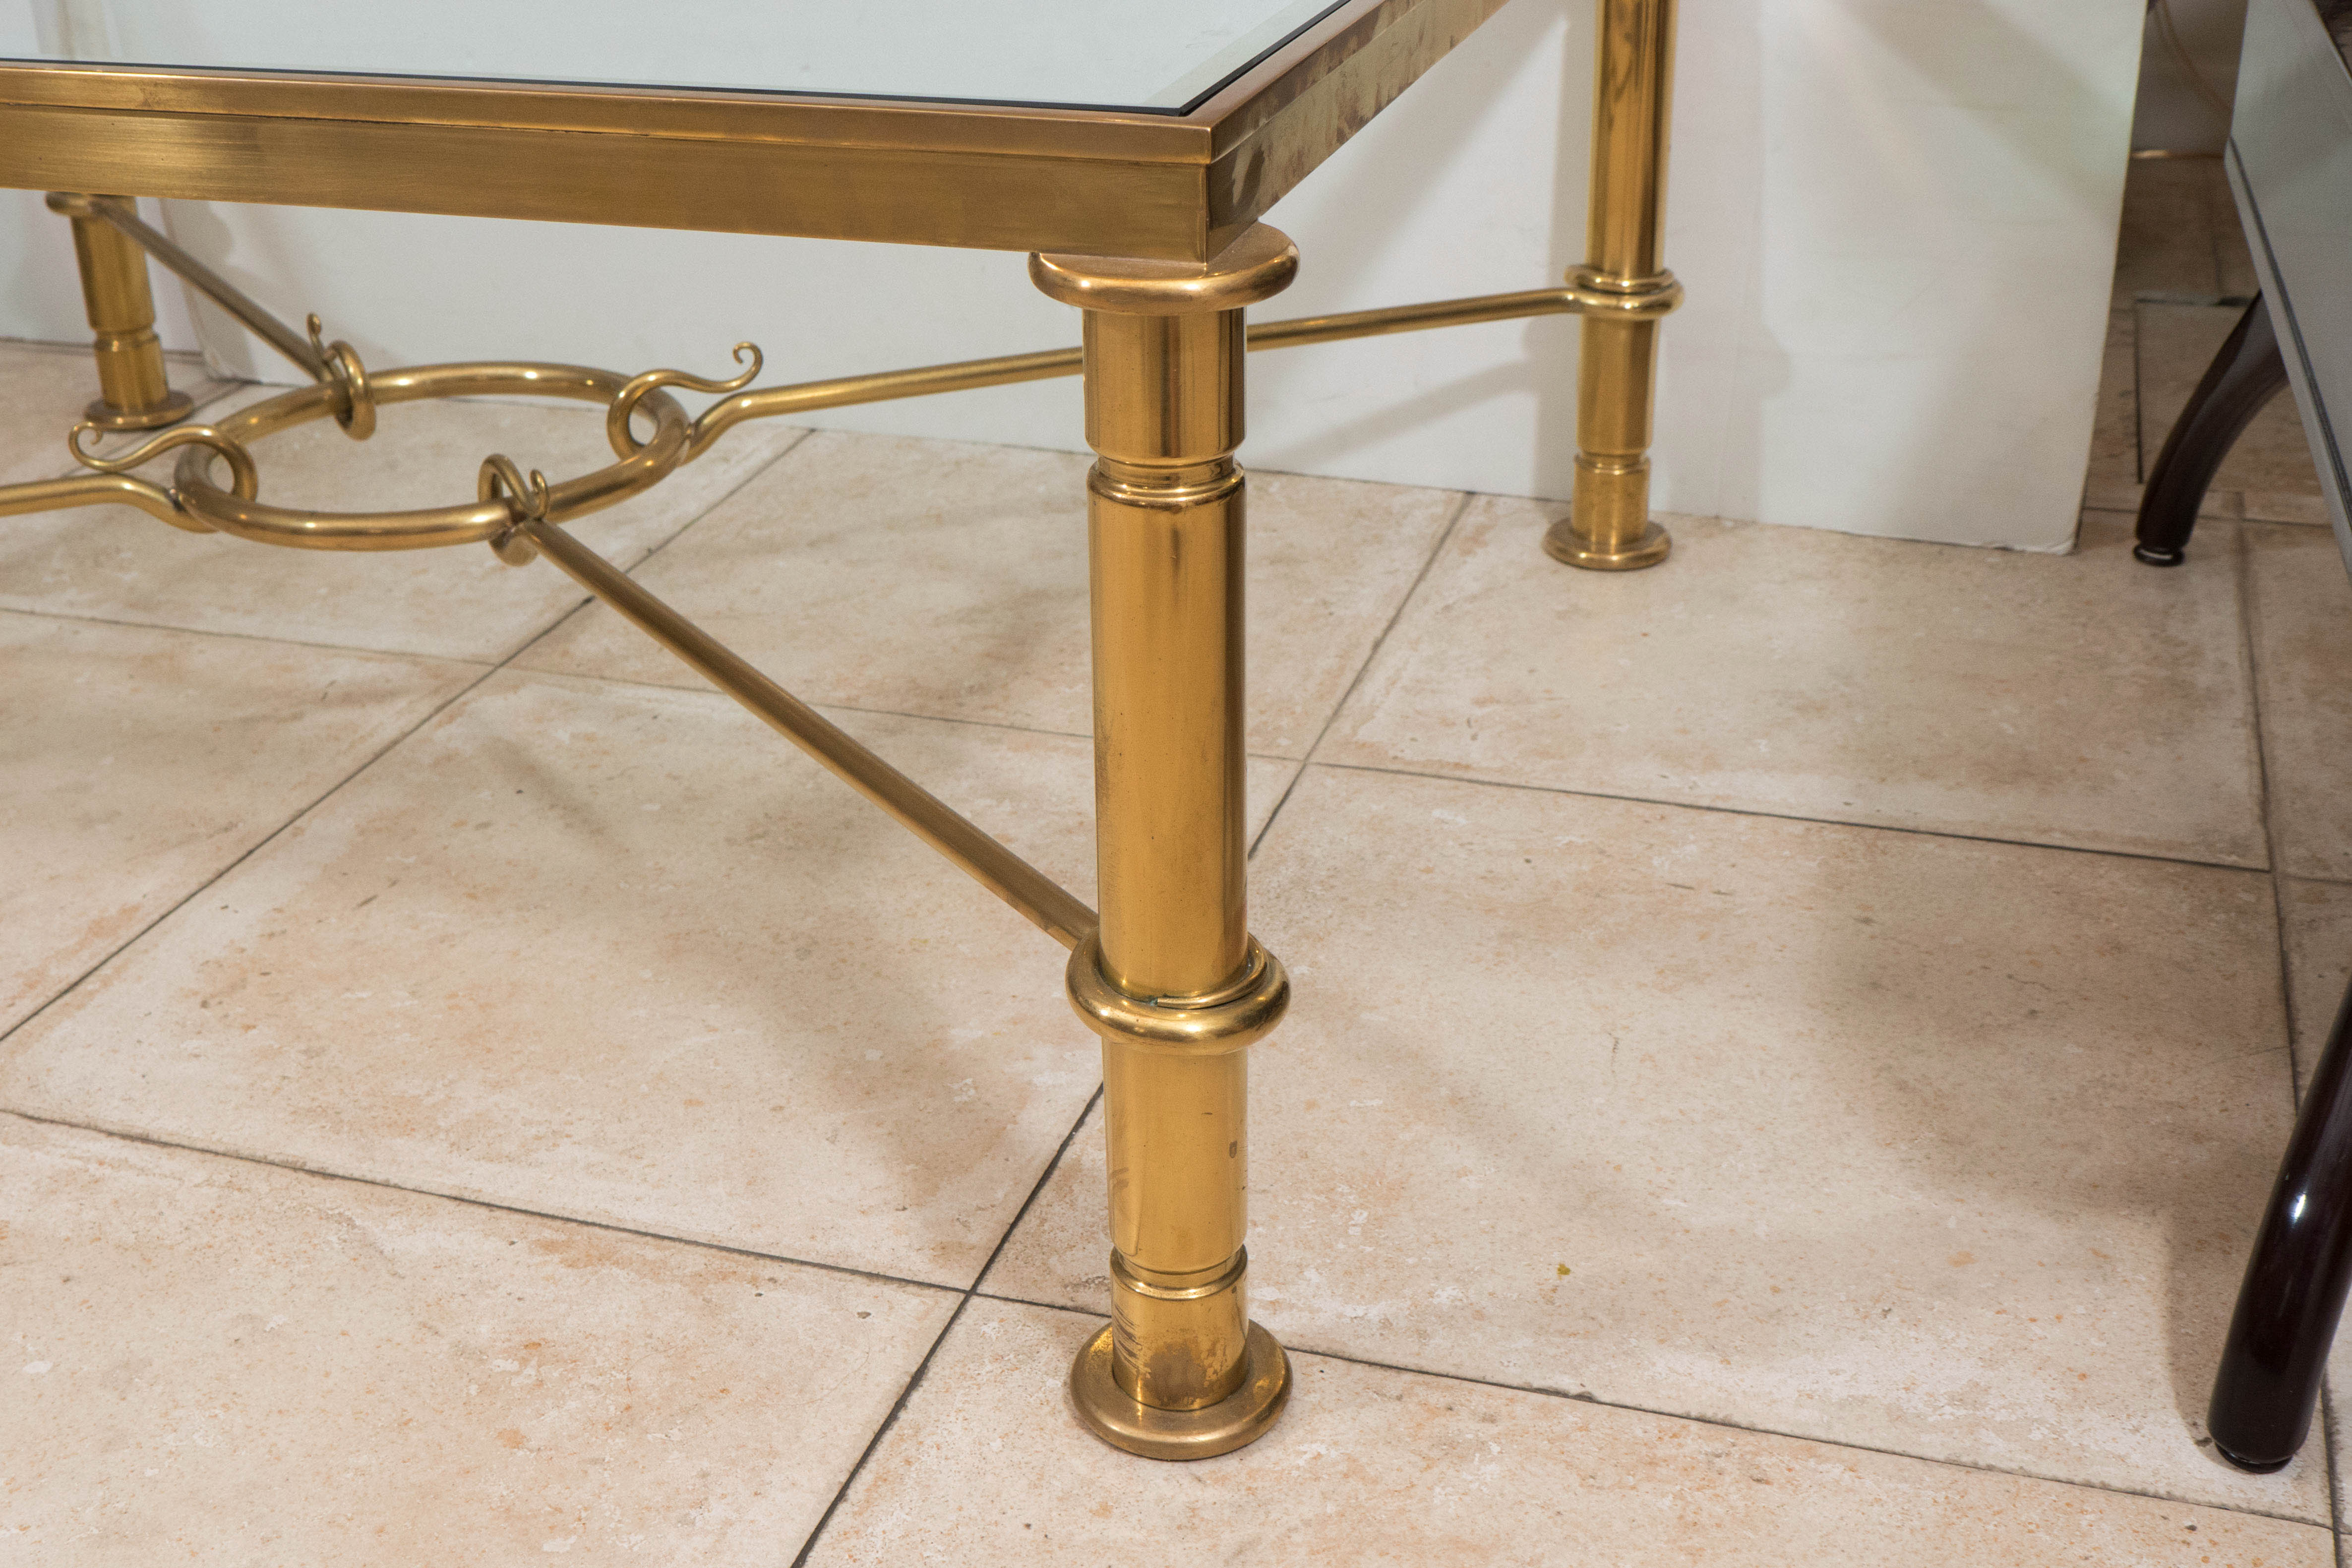 Rectangular brass coffee table with glass top and brass cross bar design.